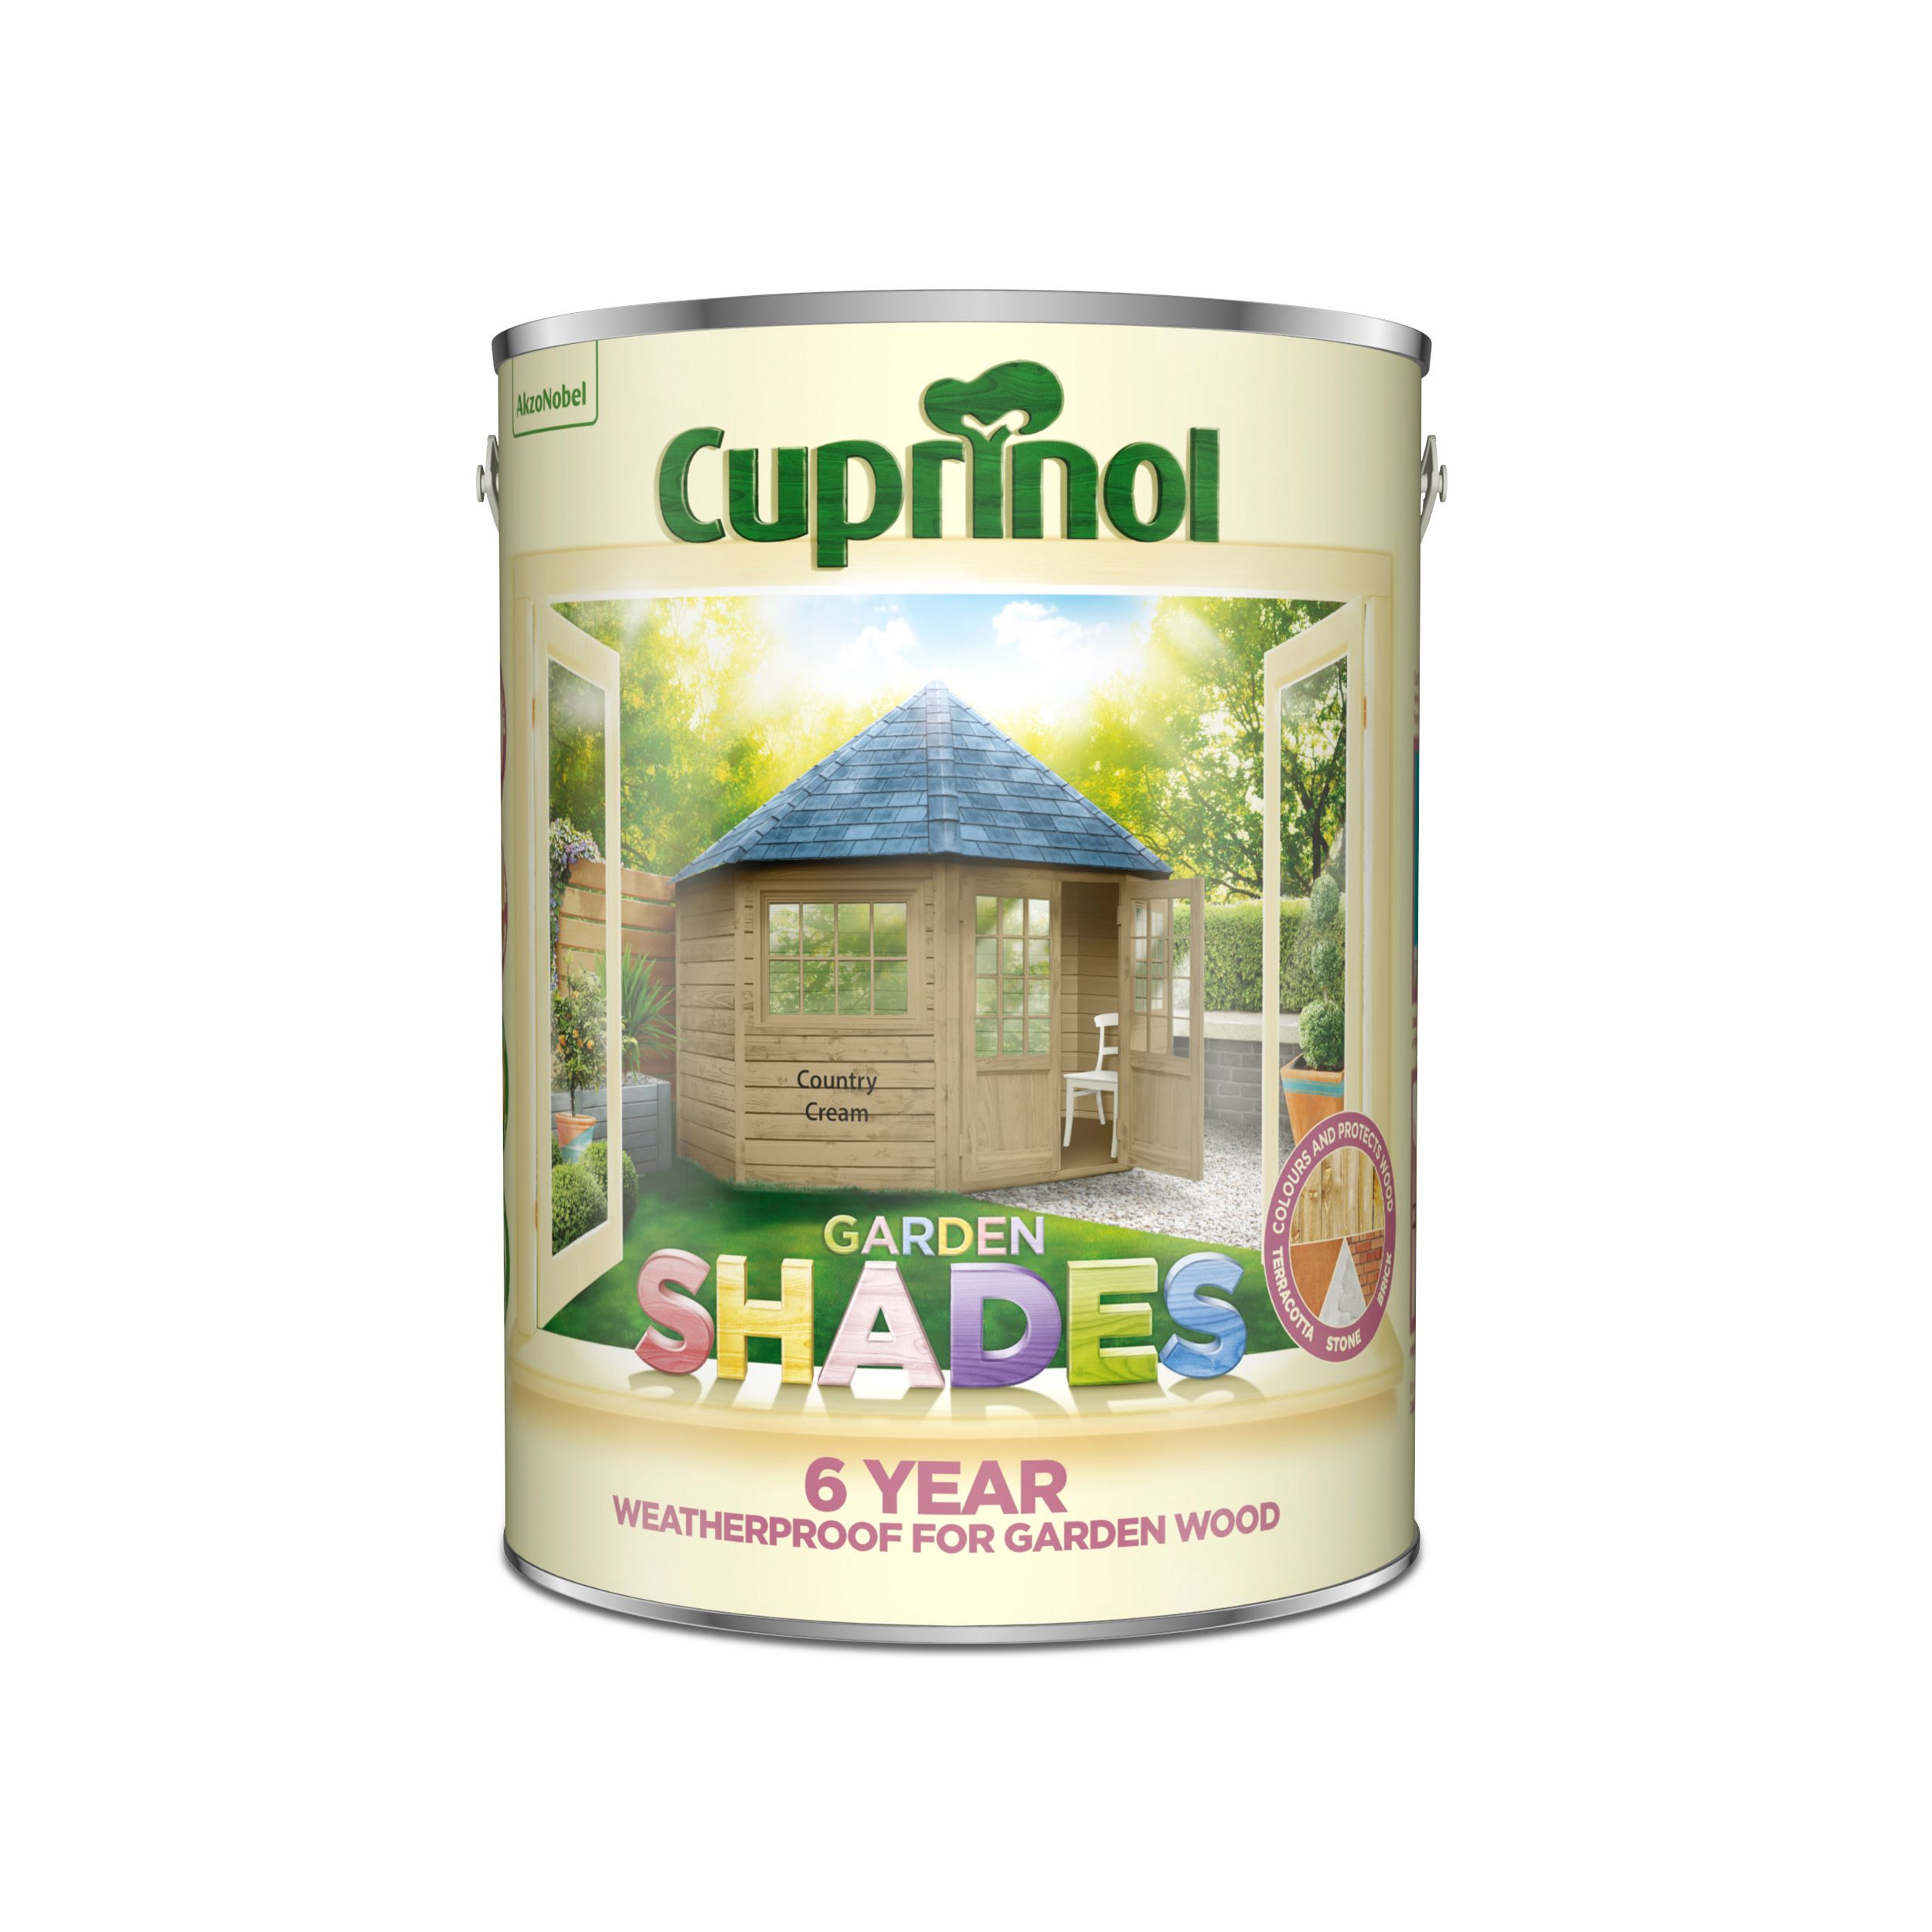 Cuprinol Garden shades Country cream Matt Multi-surface Exterior Wood paint, 5L